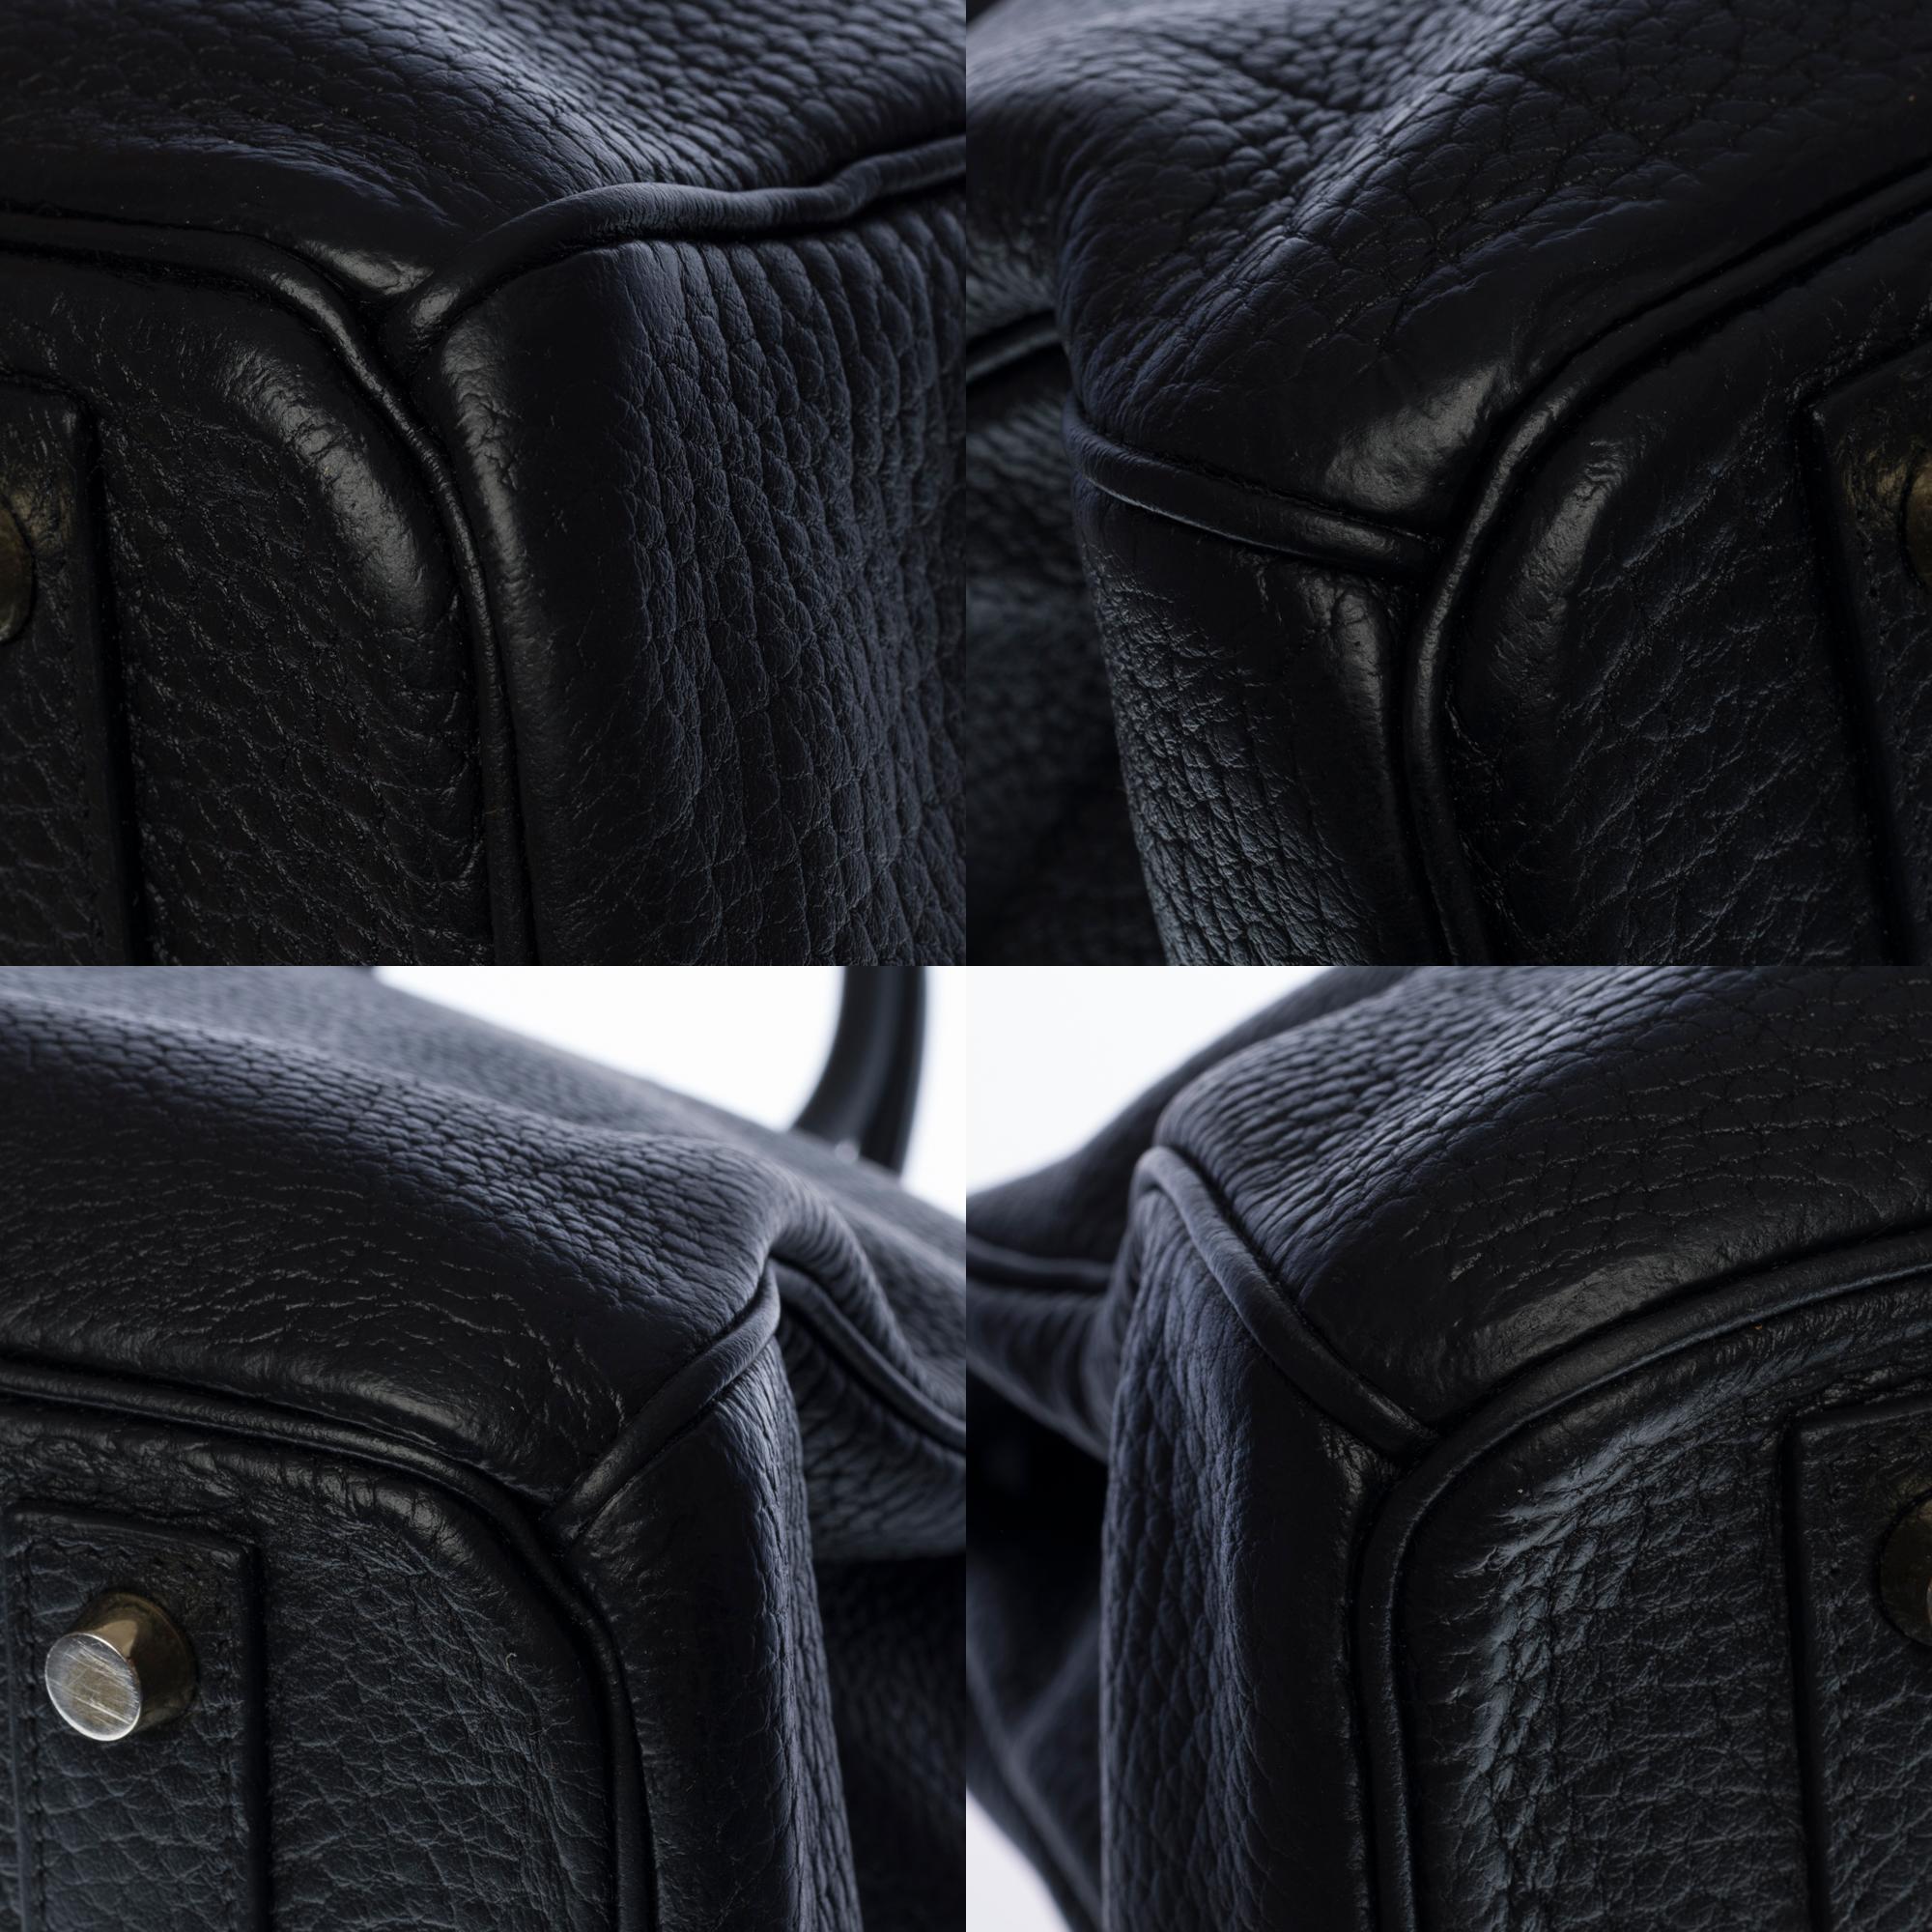 Stunning Hermes Birkin 40cm handbag in Black Togo leather, GHW 6